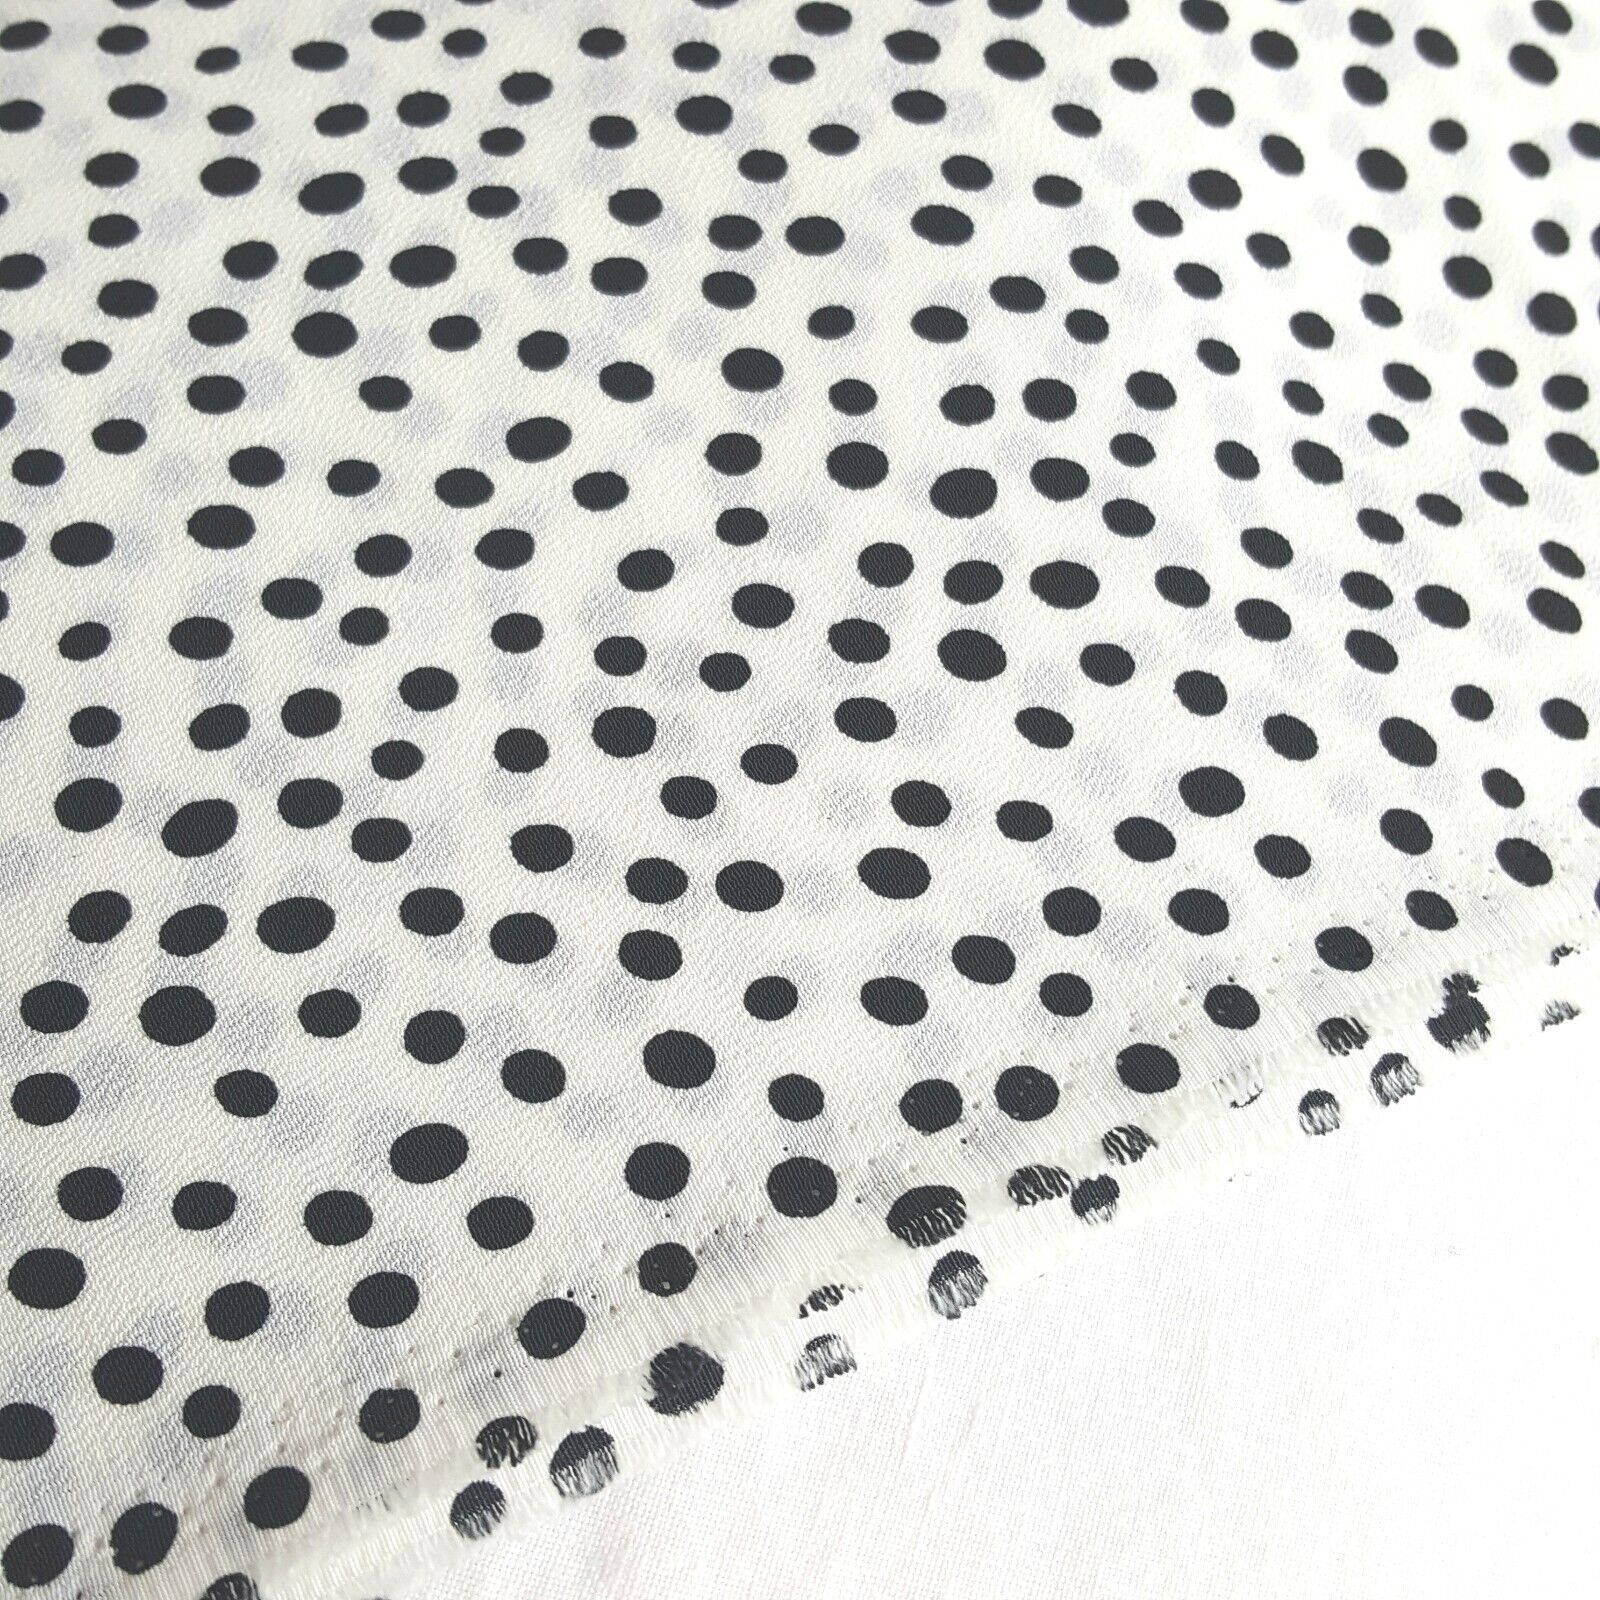 3.33yds Classic White & Black Polka Dot Rayon Polyester fabric - 45